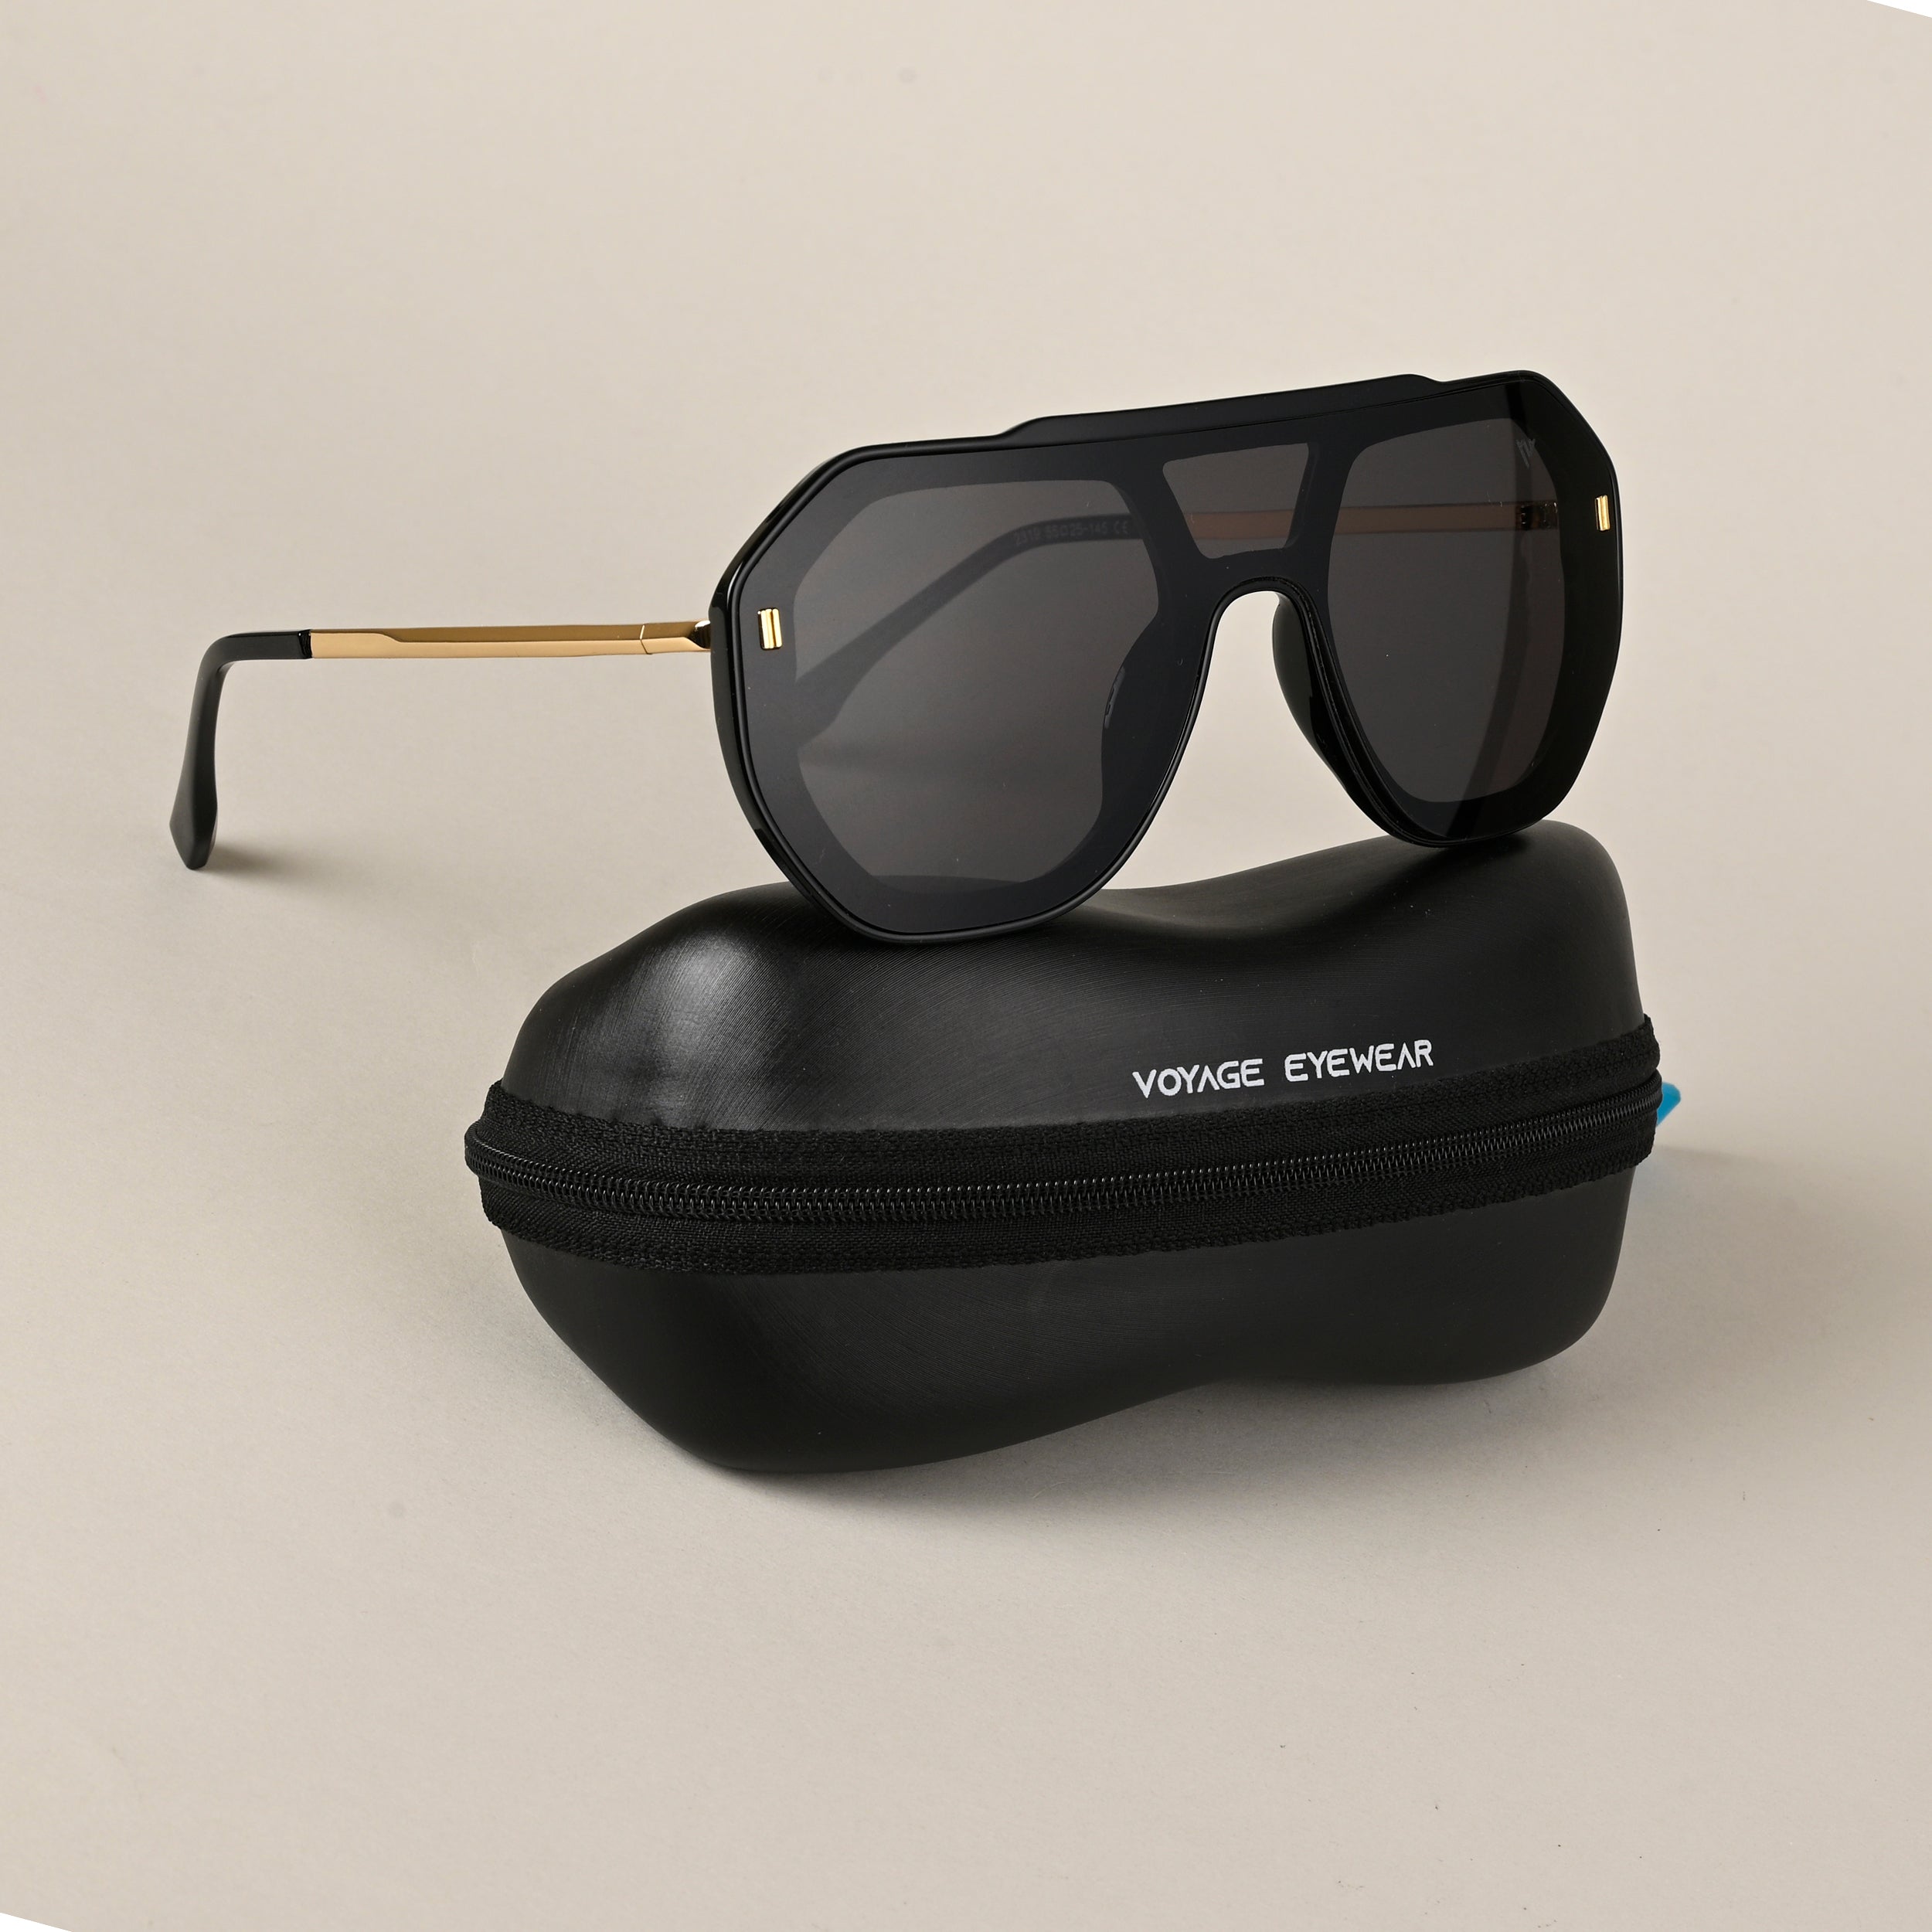 Voyage Black Wayfarer Sunglasses for Men & Women - MG4181